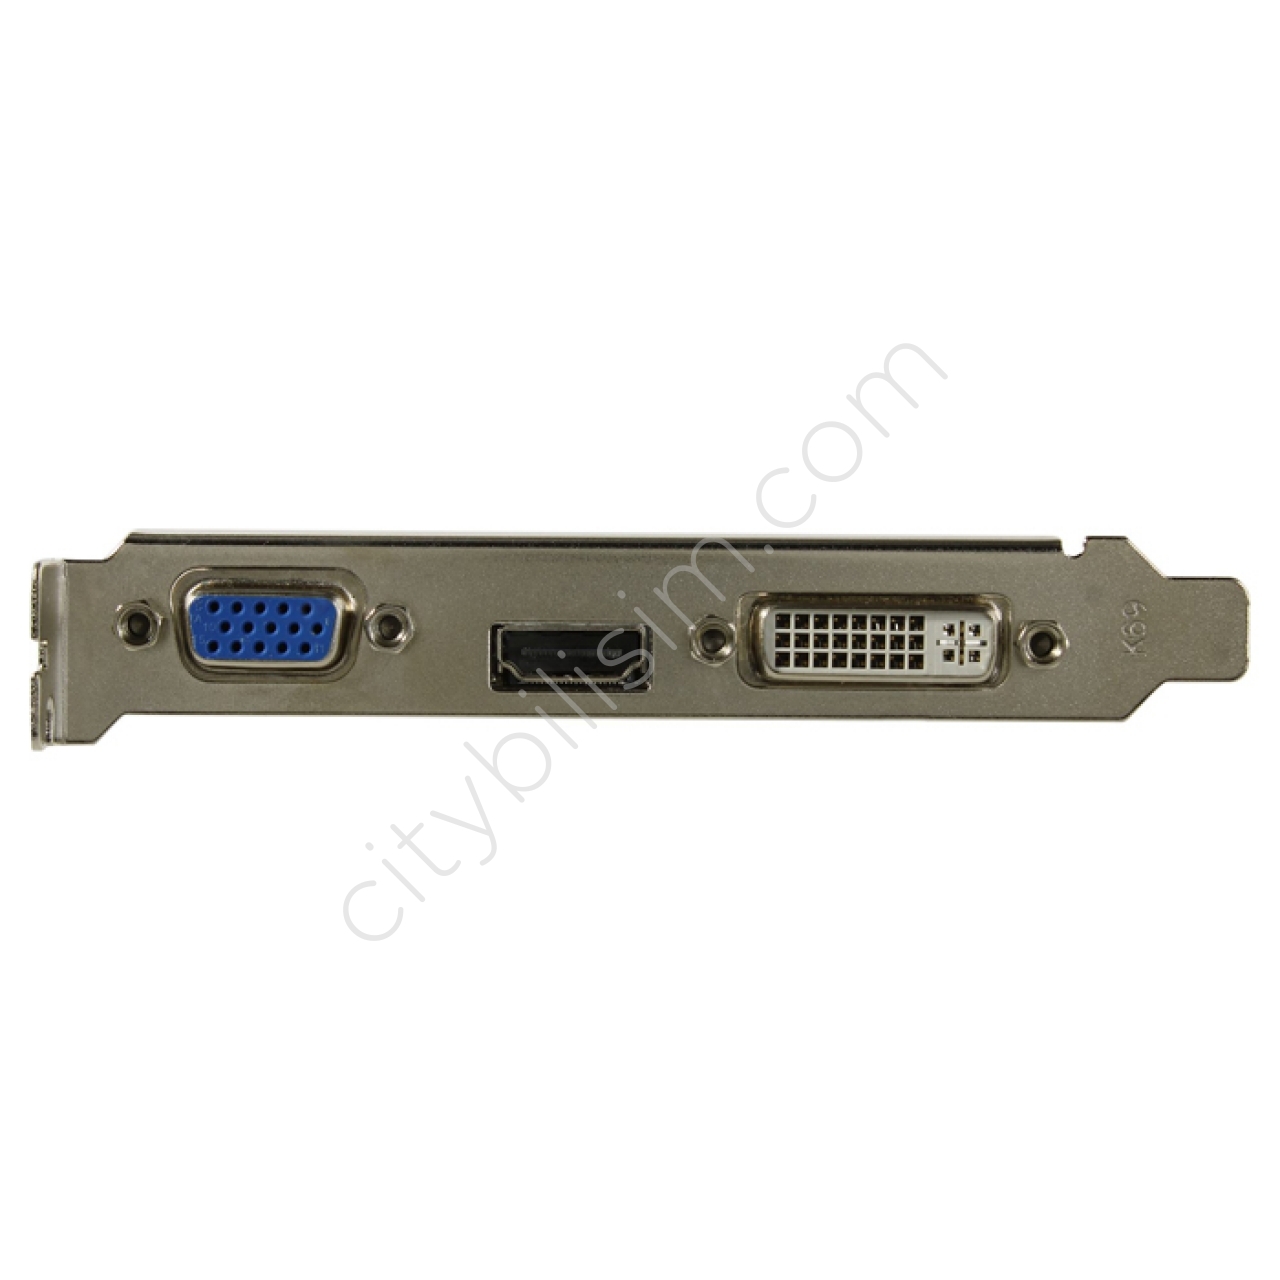 AFOX R5 220 1GB DDR3 64 Bit AFR5220-1024D3L4 (LP)